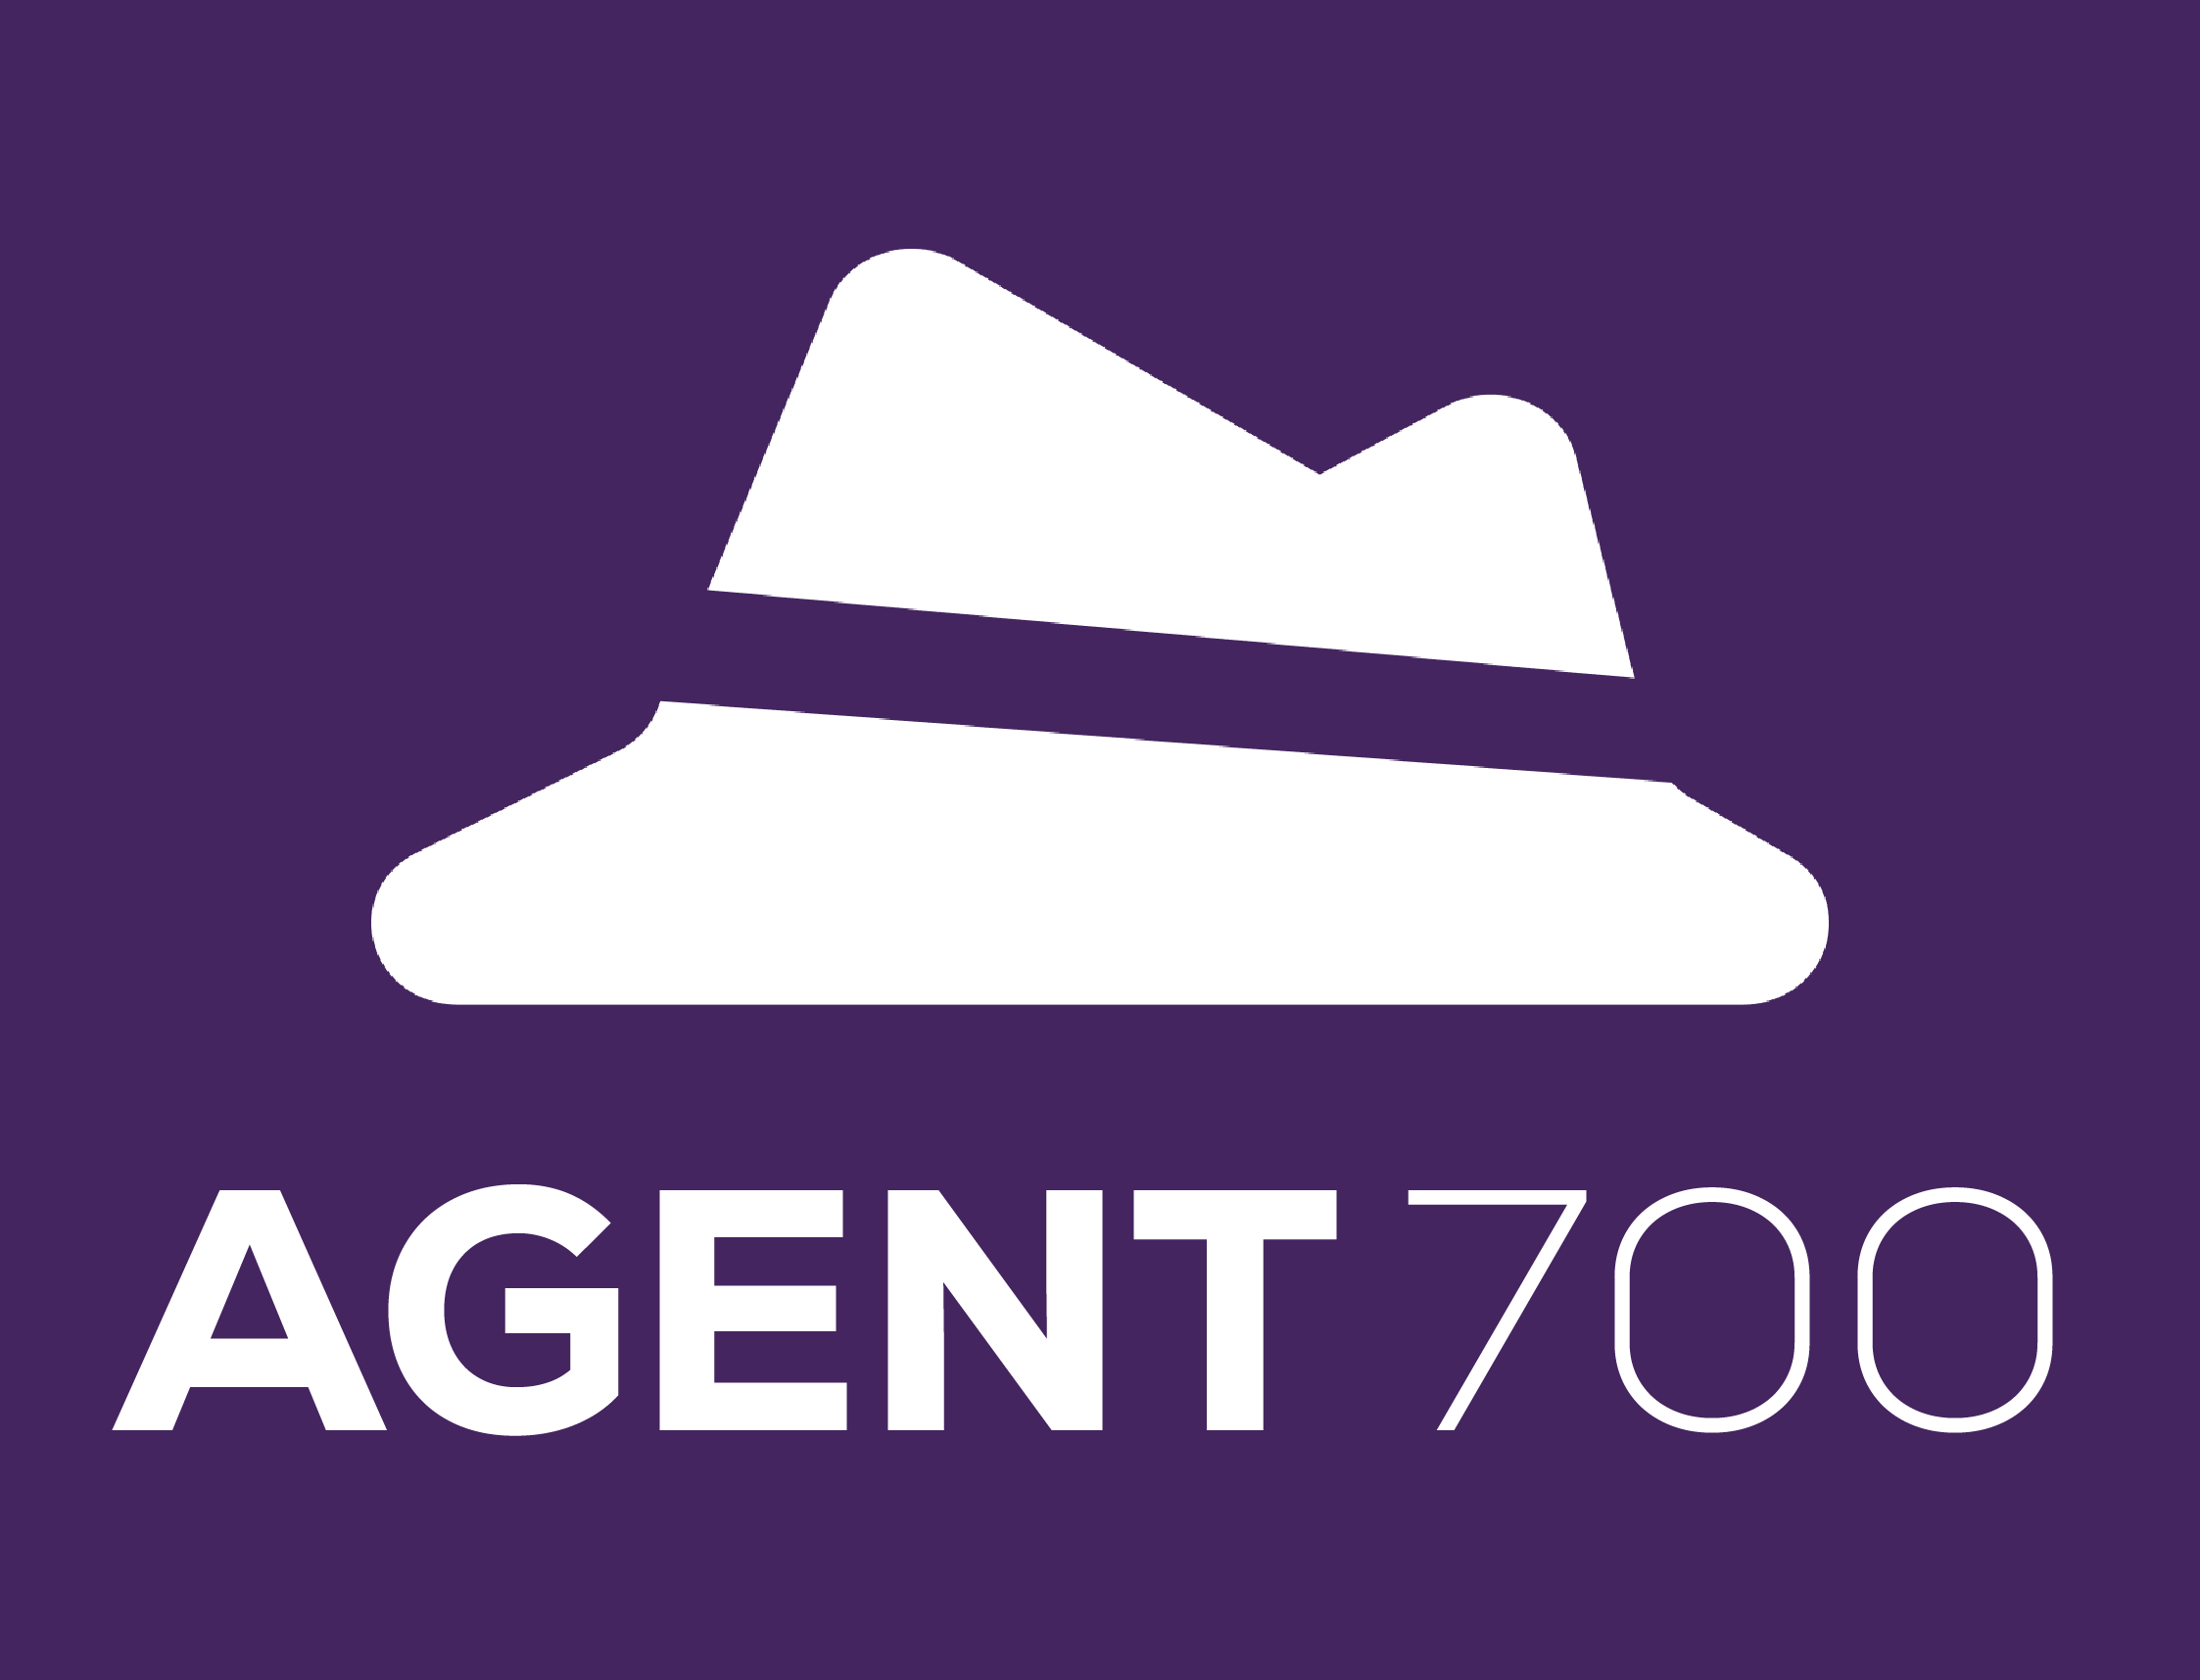 Agent700 logo